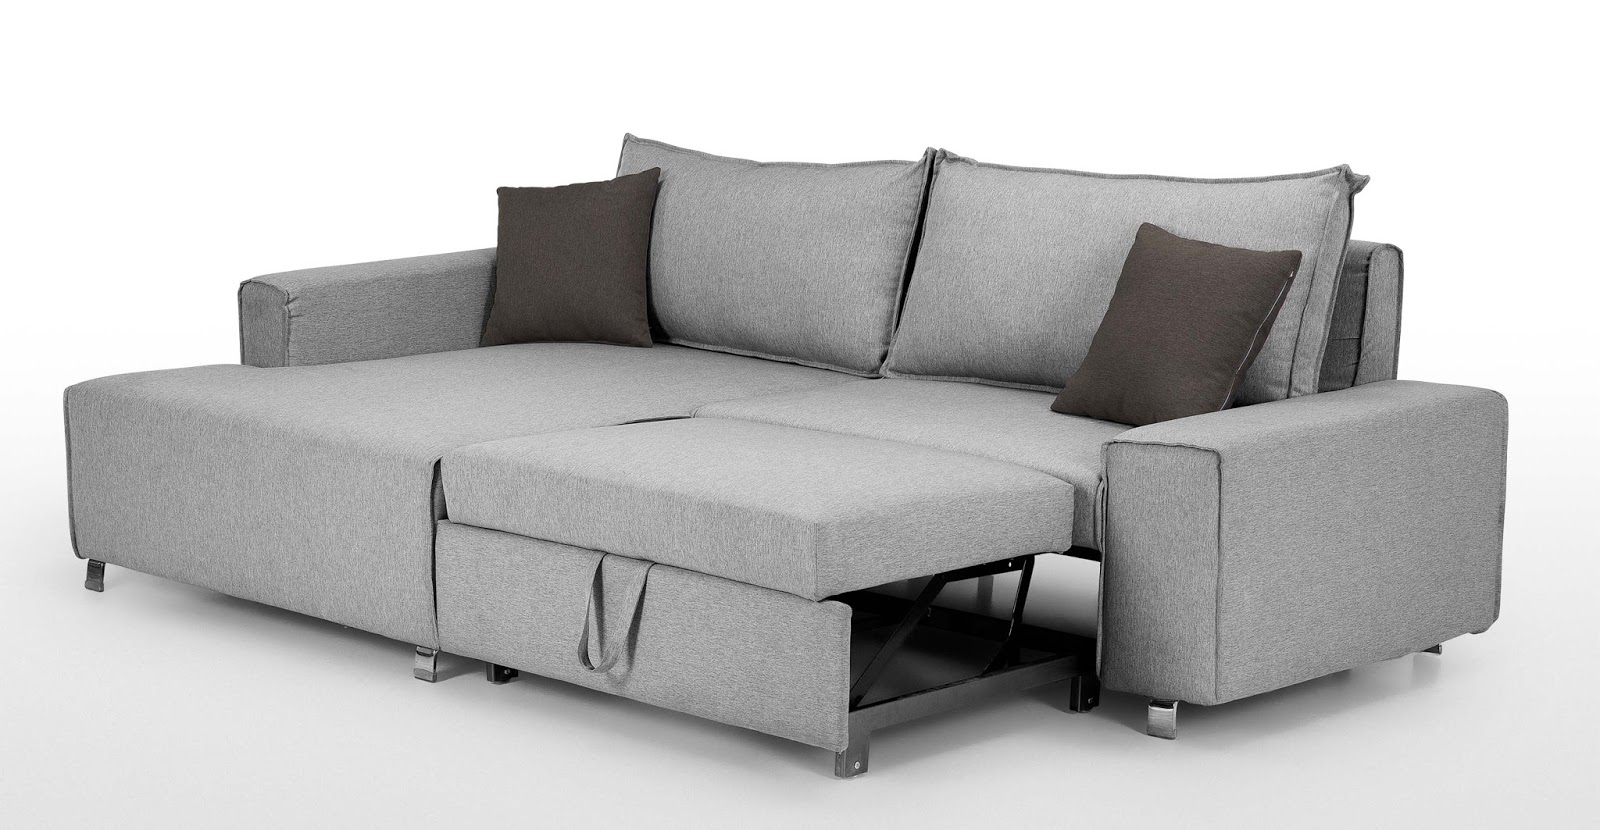 grey corner sofa bed sale